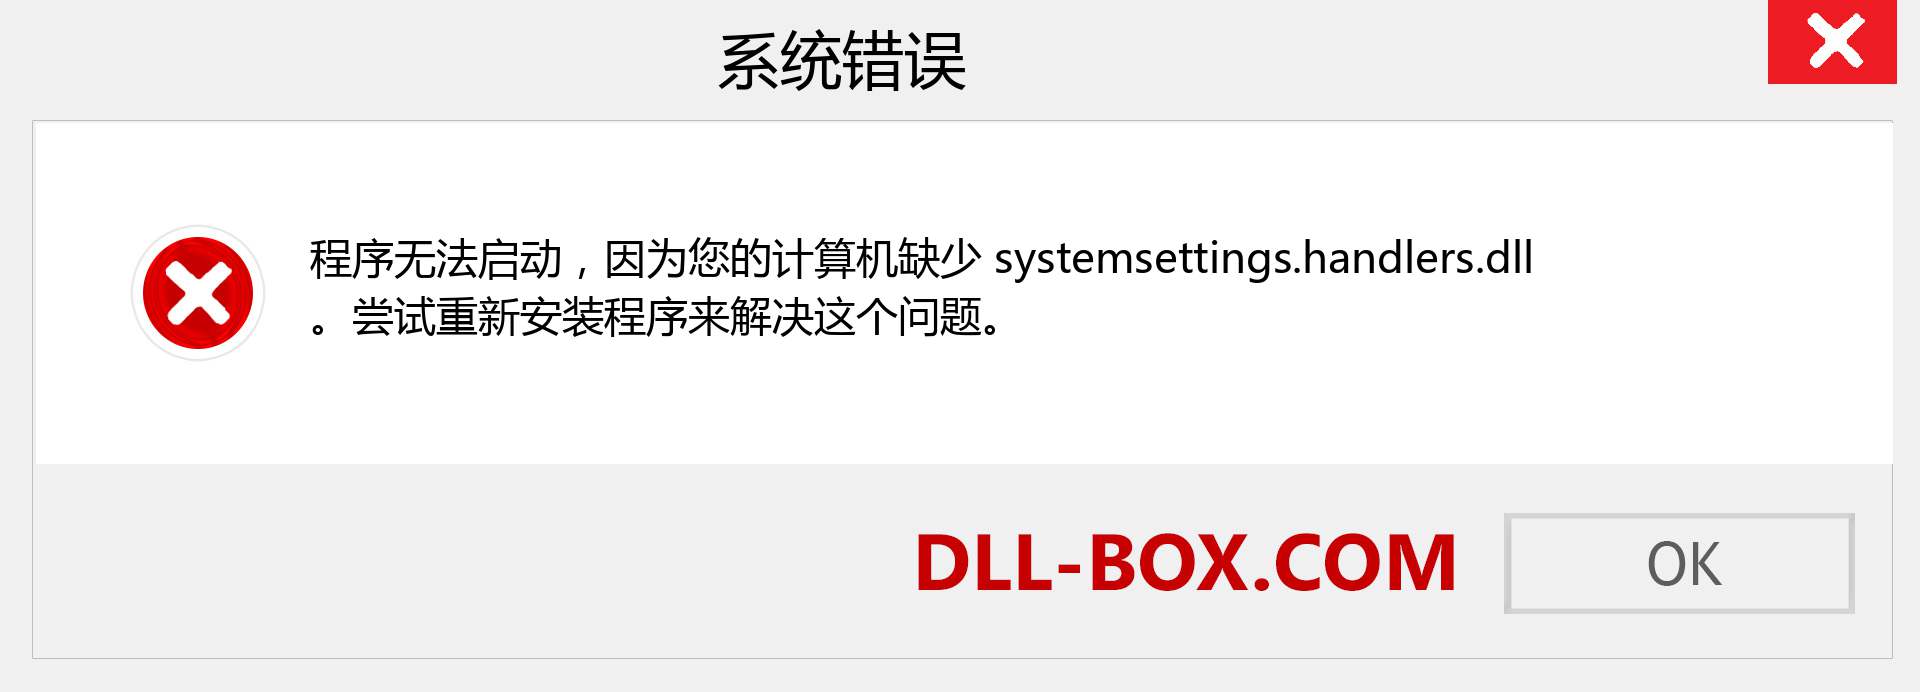 systemsettings.handlers.dll 文件丢失？。 适用于 Windows 7、8、10 的下载 - 修复 Windows、照片、图像上的 systemsettings.handlers dll 丢失错误